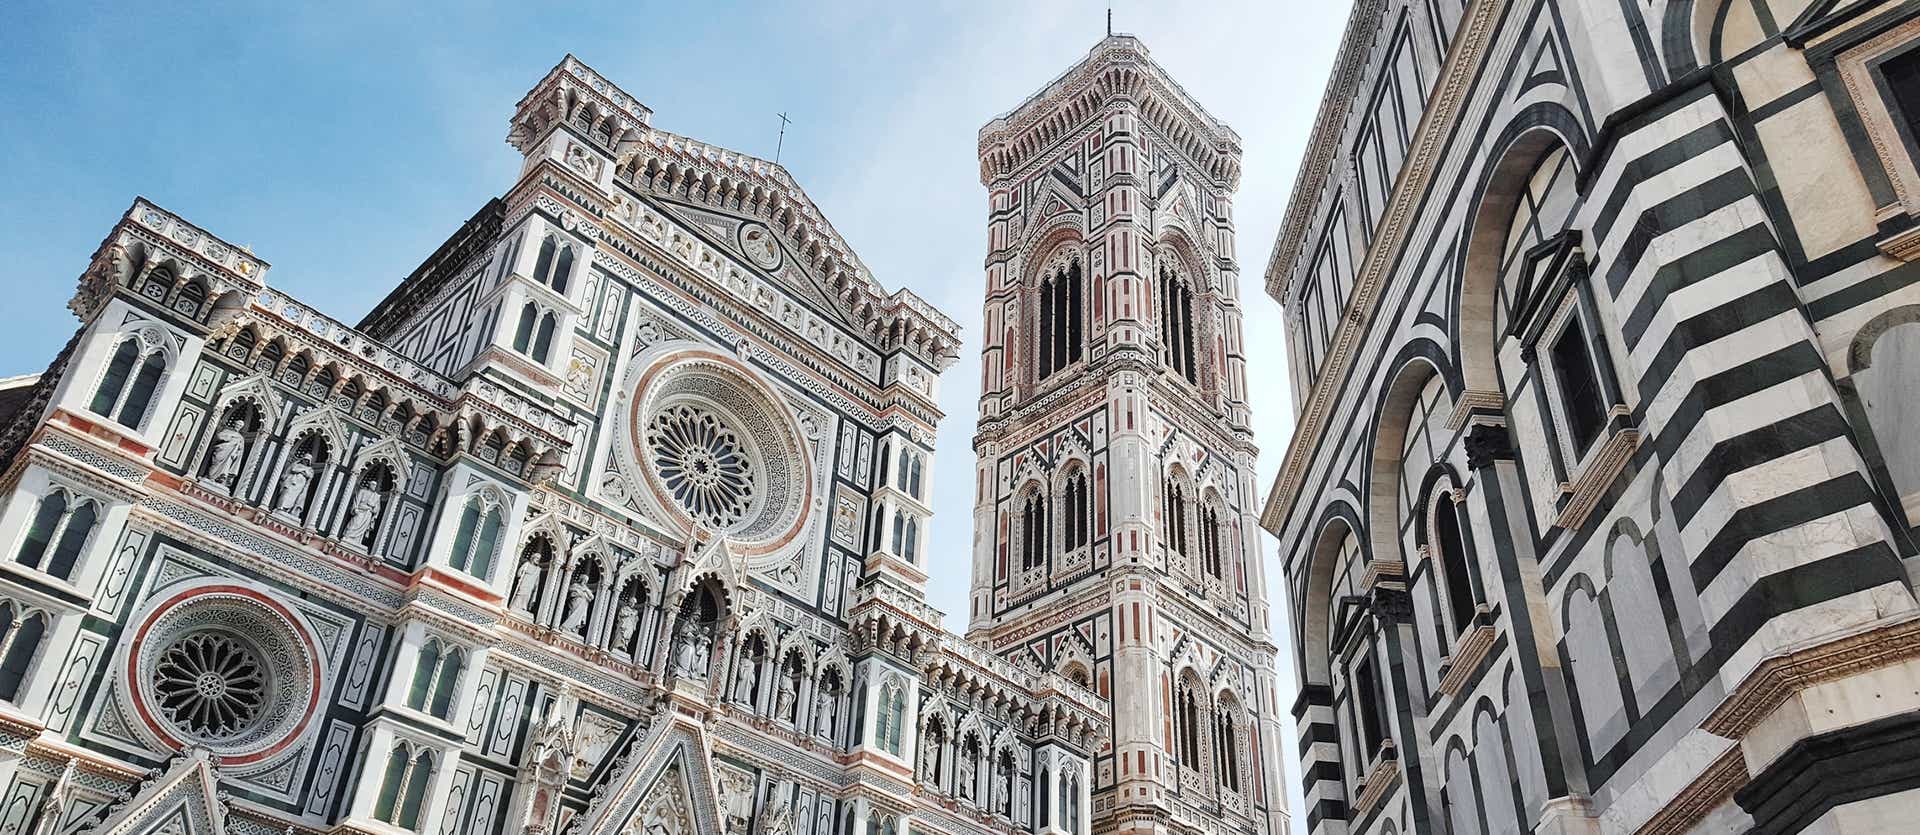 Piazza Del Duomo <span class="iconos separador"></span> Florence